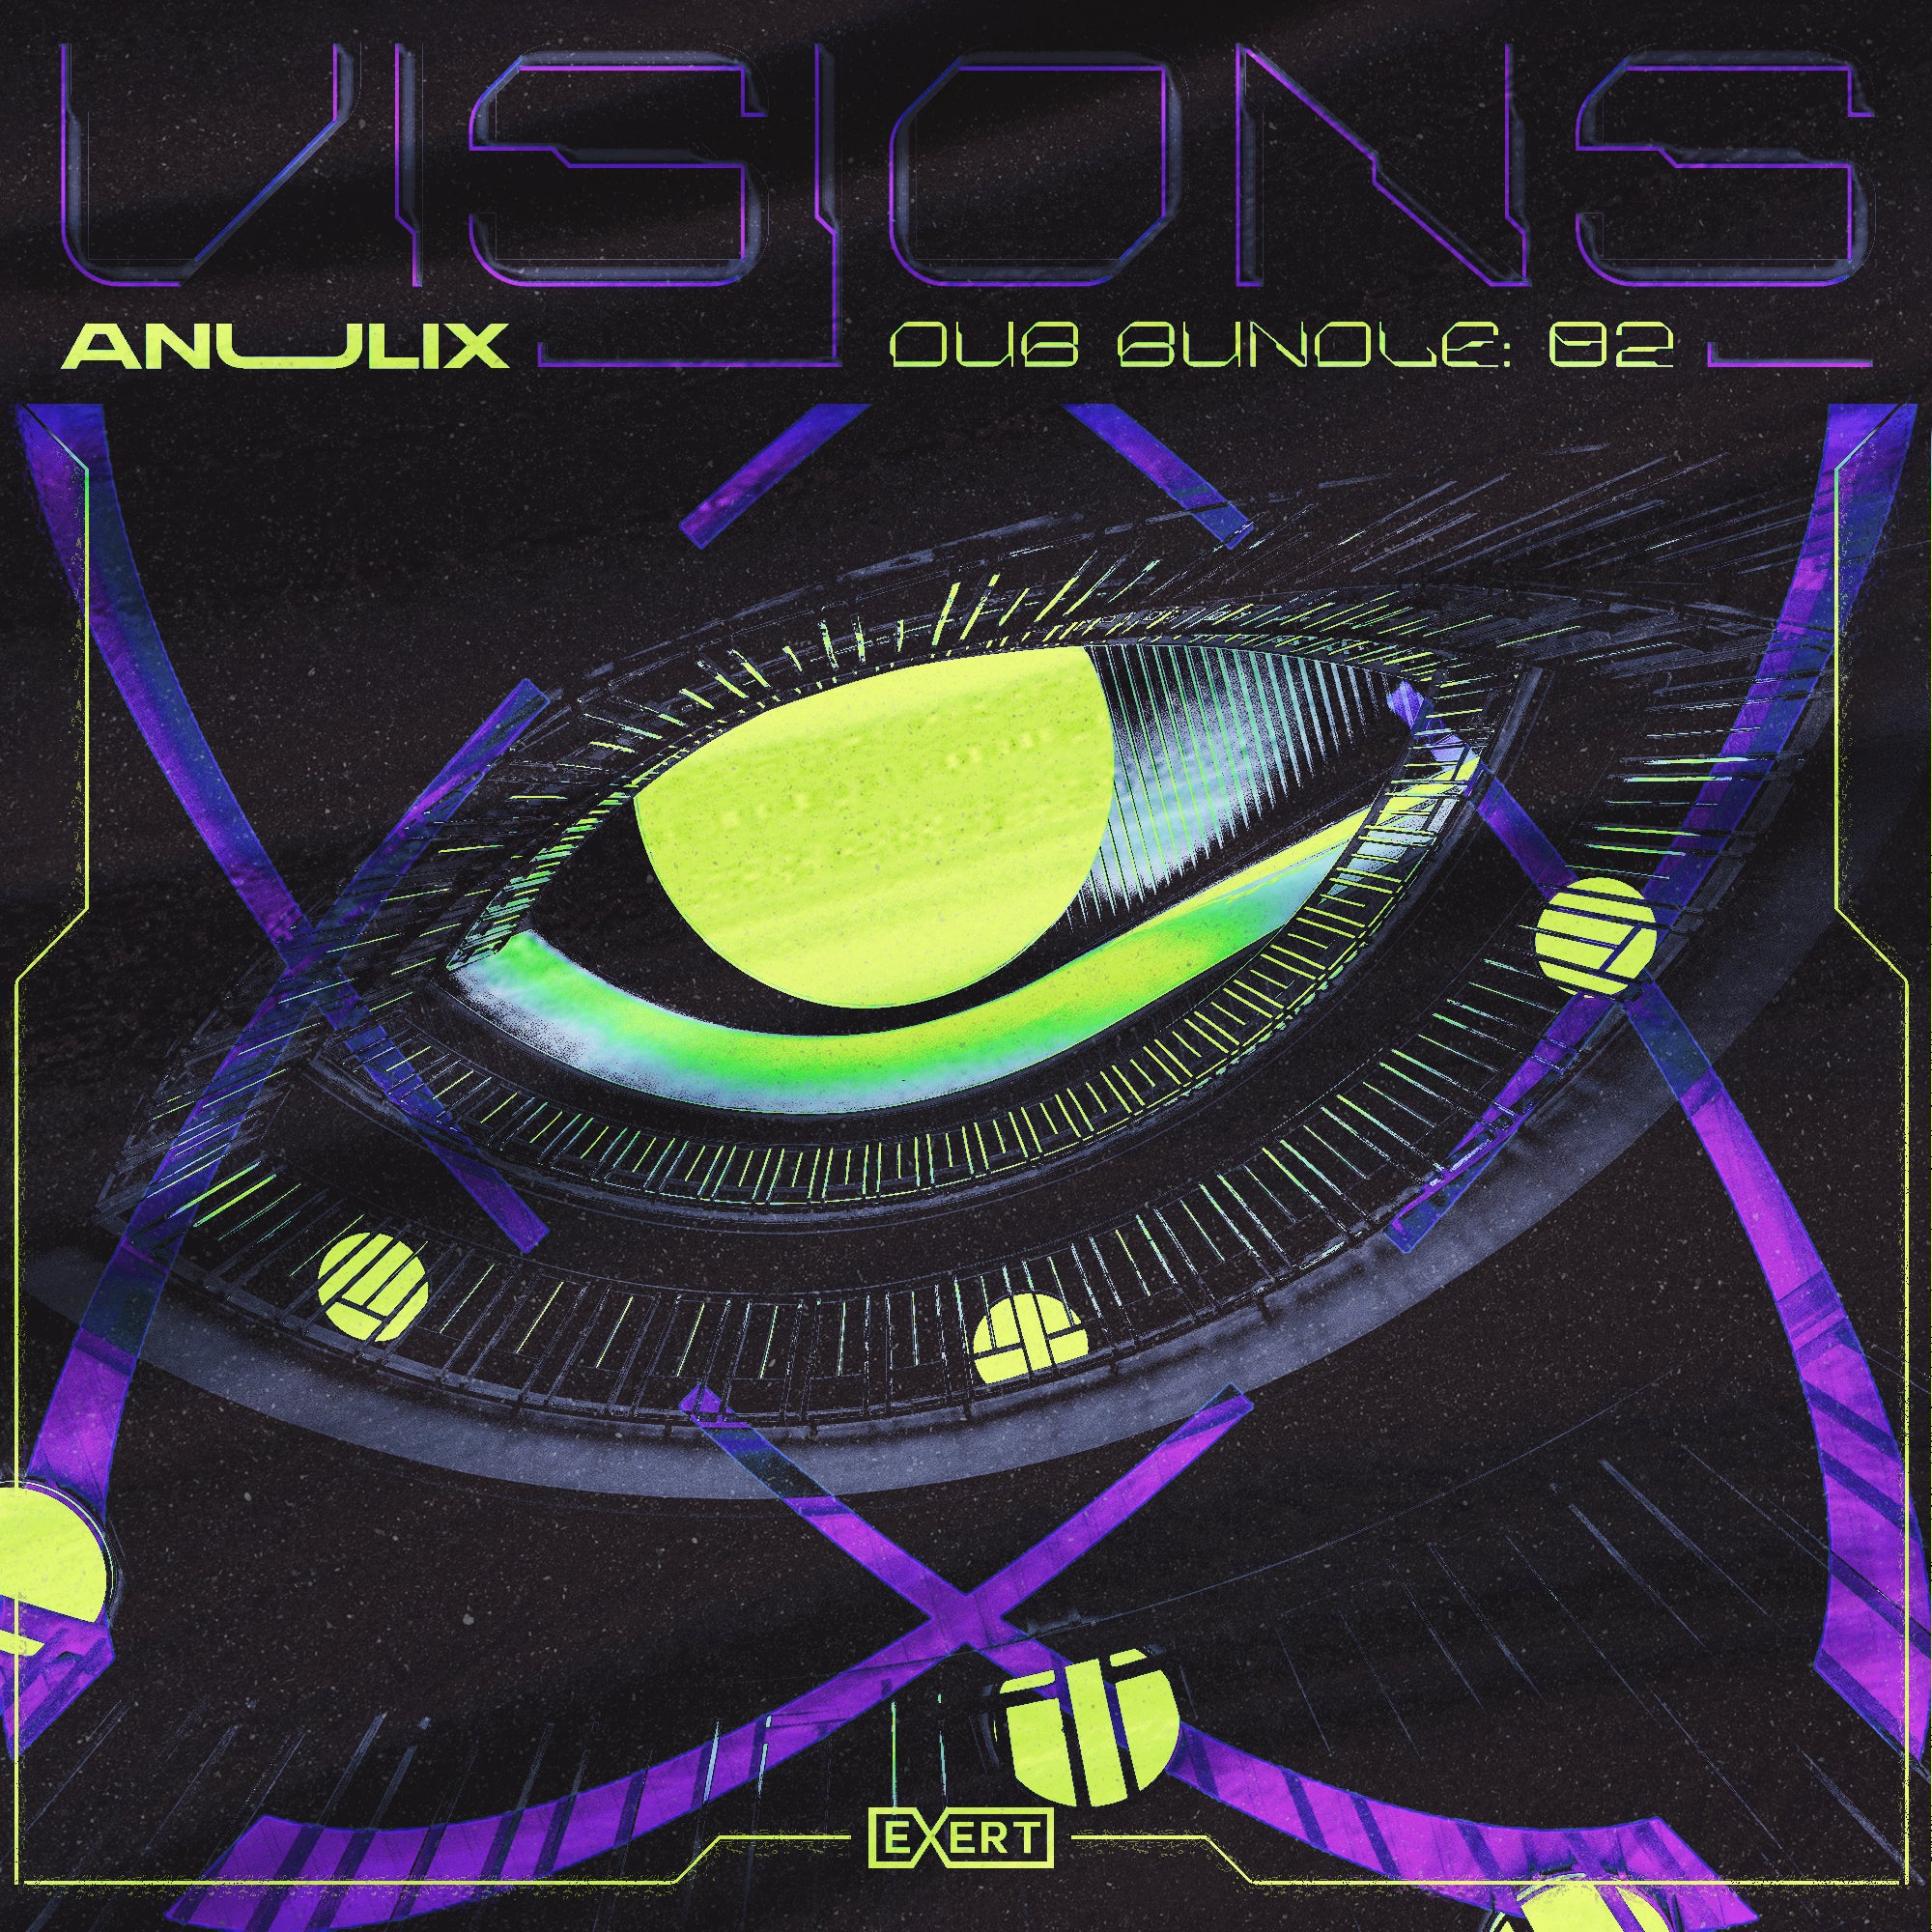 Anulix - Visions 2 Dubpack